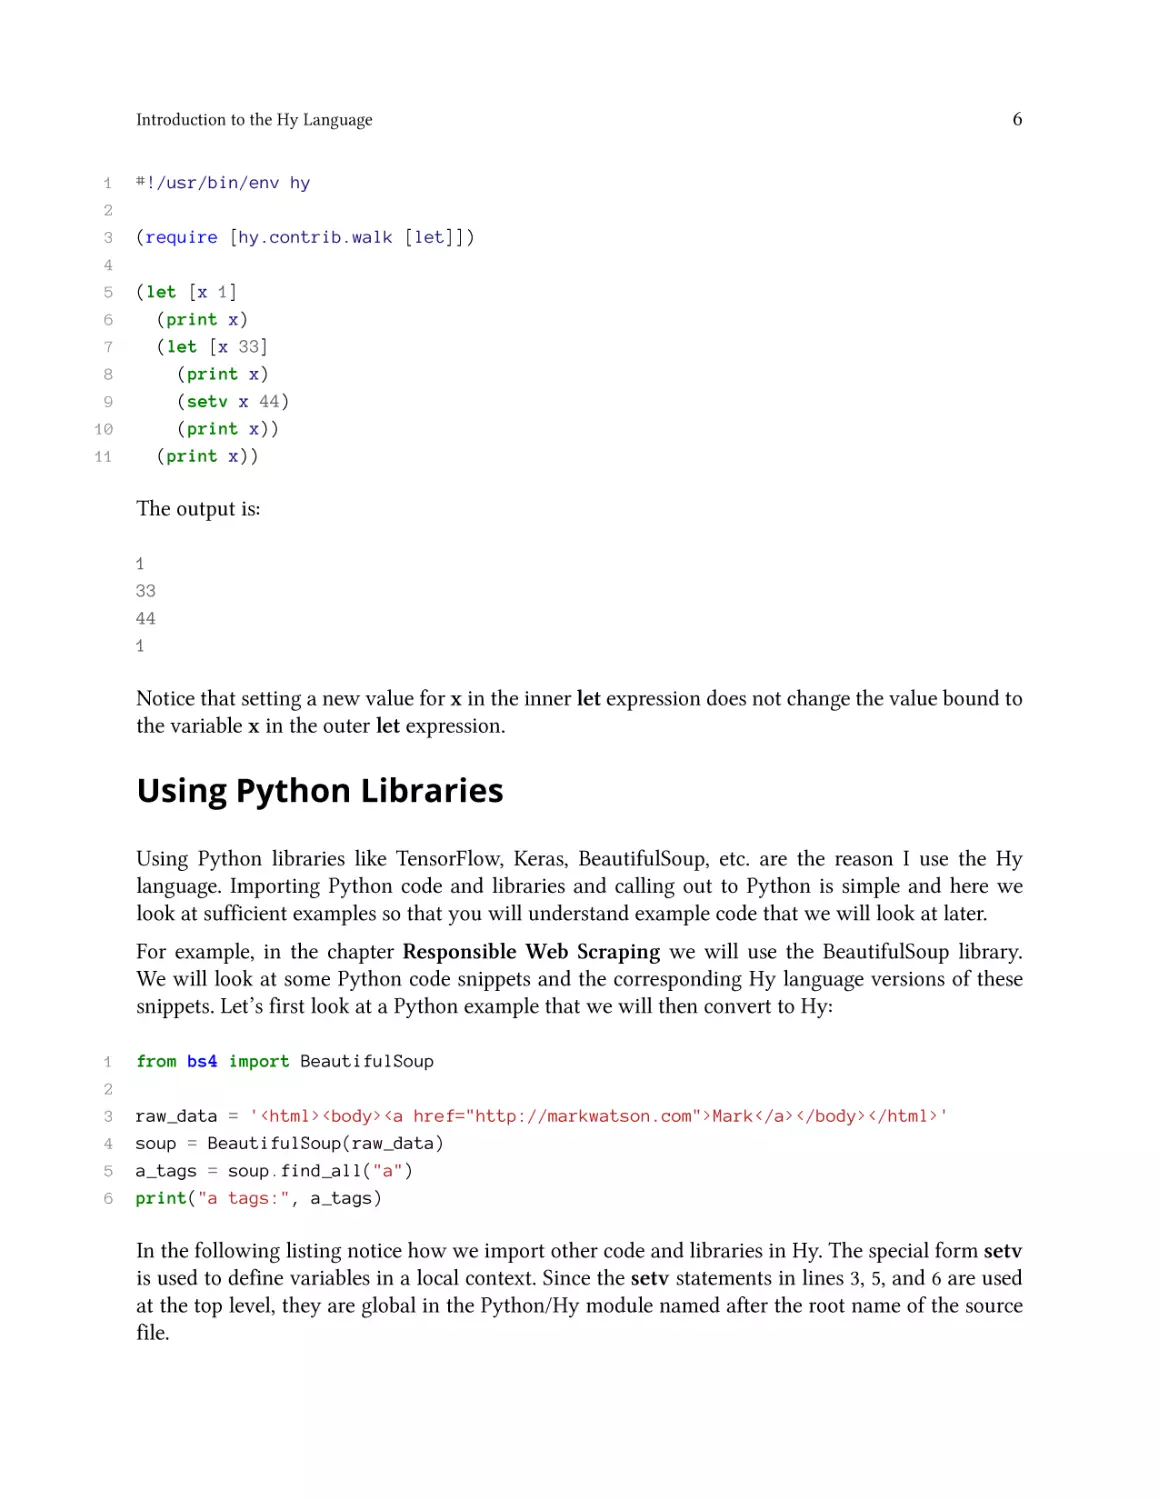 Using Python Libraries